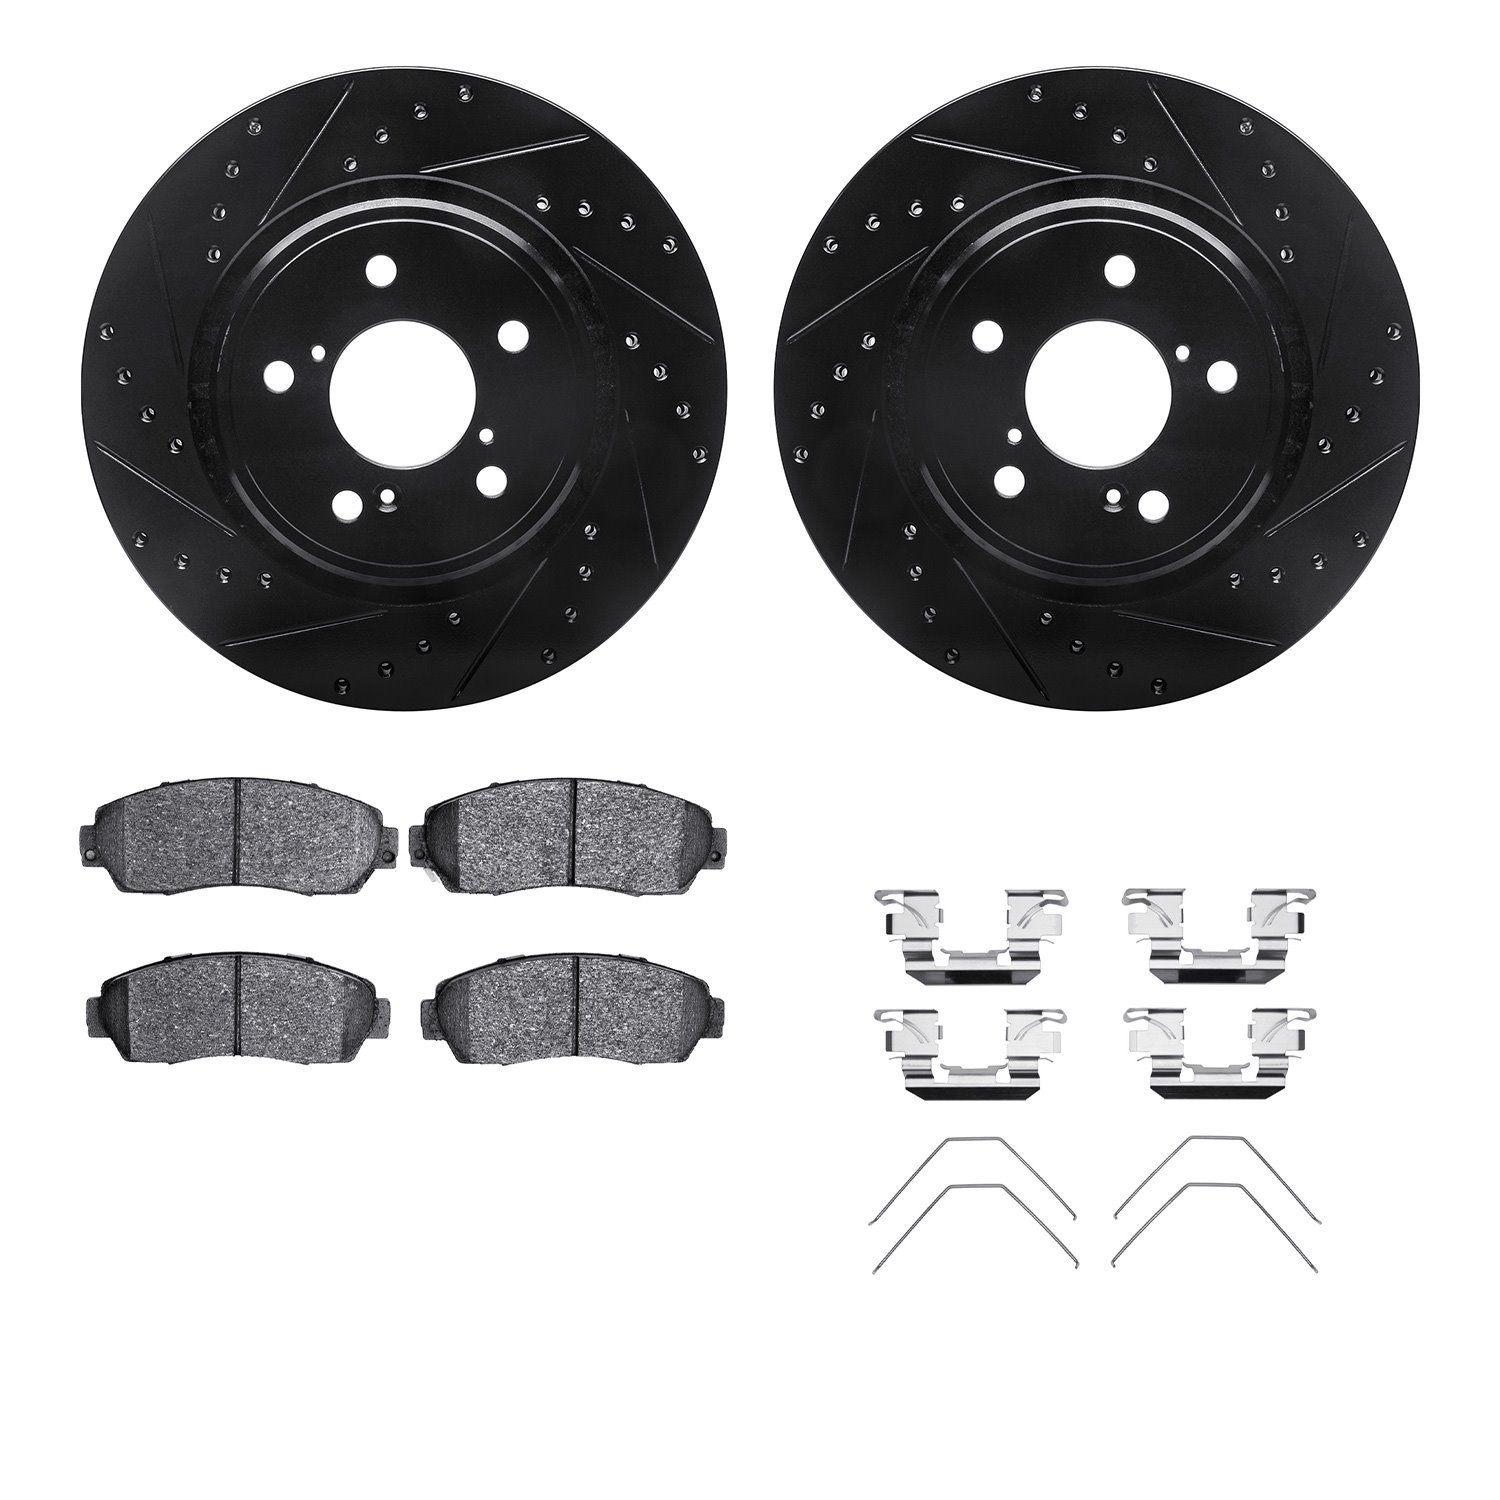 8312-59087 Drilled/Slotted Brake Rotors with 3000-Series Ceramic Brake Pads Kit & Hardware [Black], Fits Select Acura/Honda, Pos